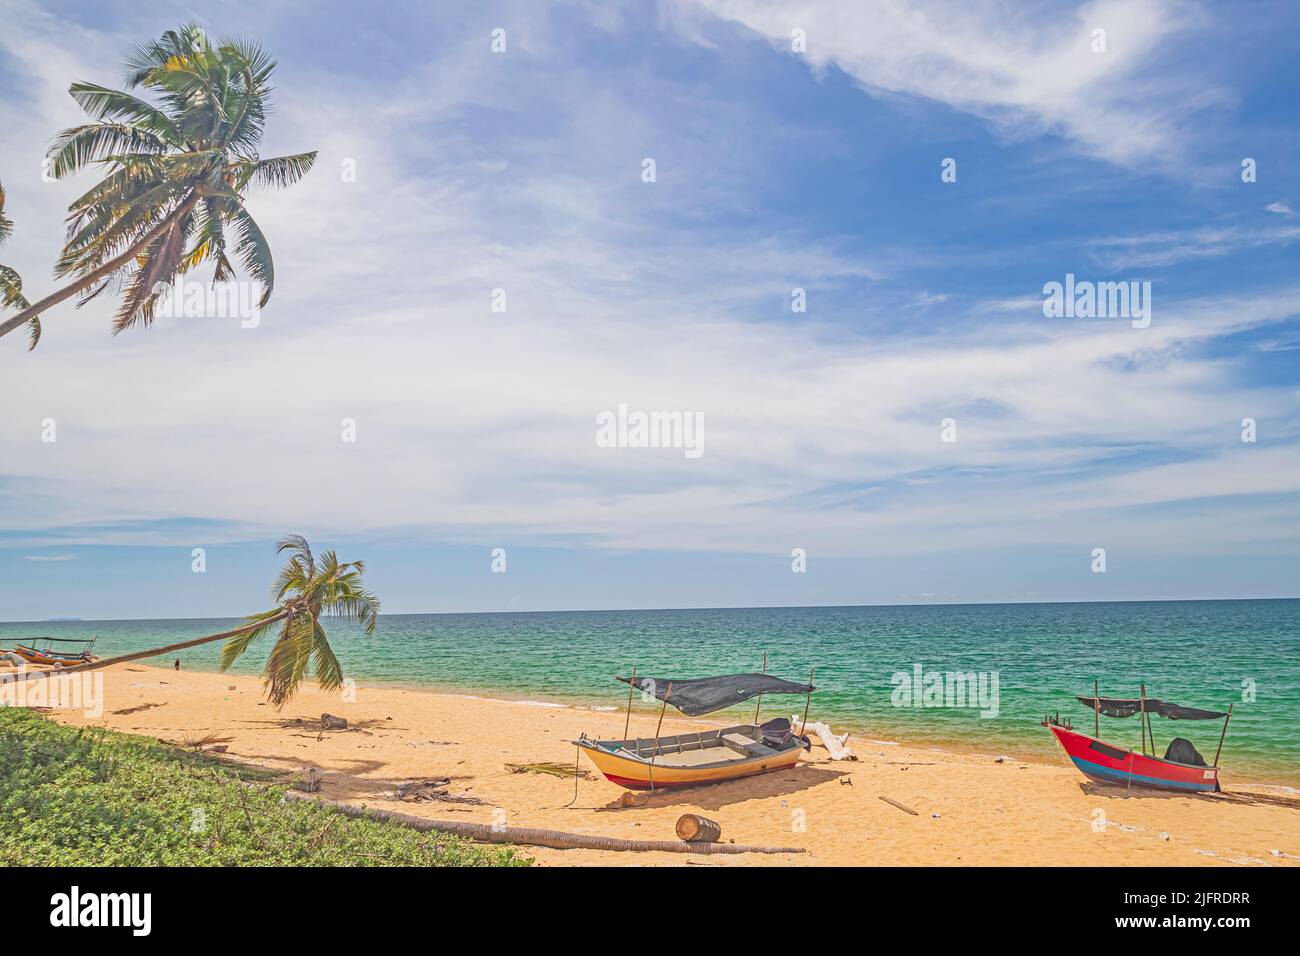 Der Blick auf den Pantai Jambu Bongkok Beach in Terengganu, Malaysia, liegt unter dem wolkenbewachsenen Himmel mit Kokospalmen und Booten am Sandstrand. Stockfoto